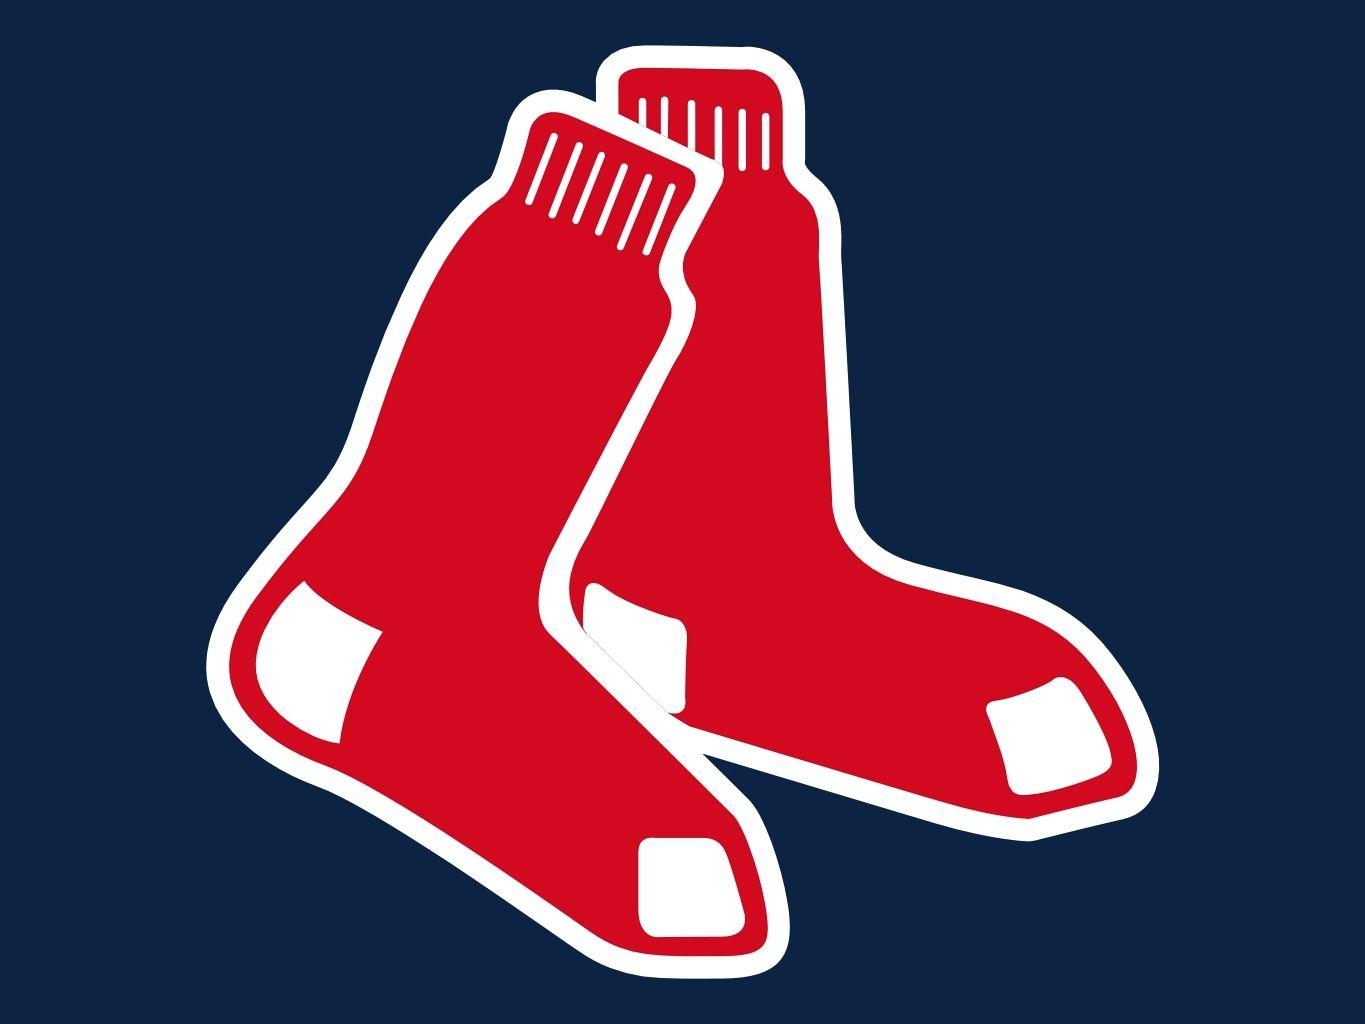 Boston Red Sox Team Logo - Boston Red Sox | Pro Sports Teams Wiki | FANDOM powered by Wikia